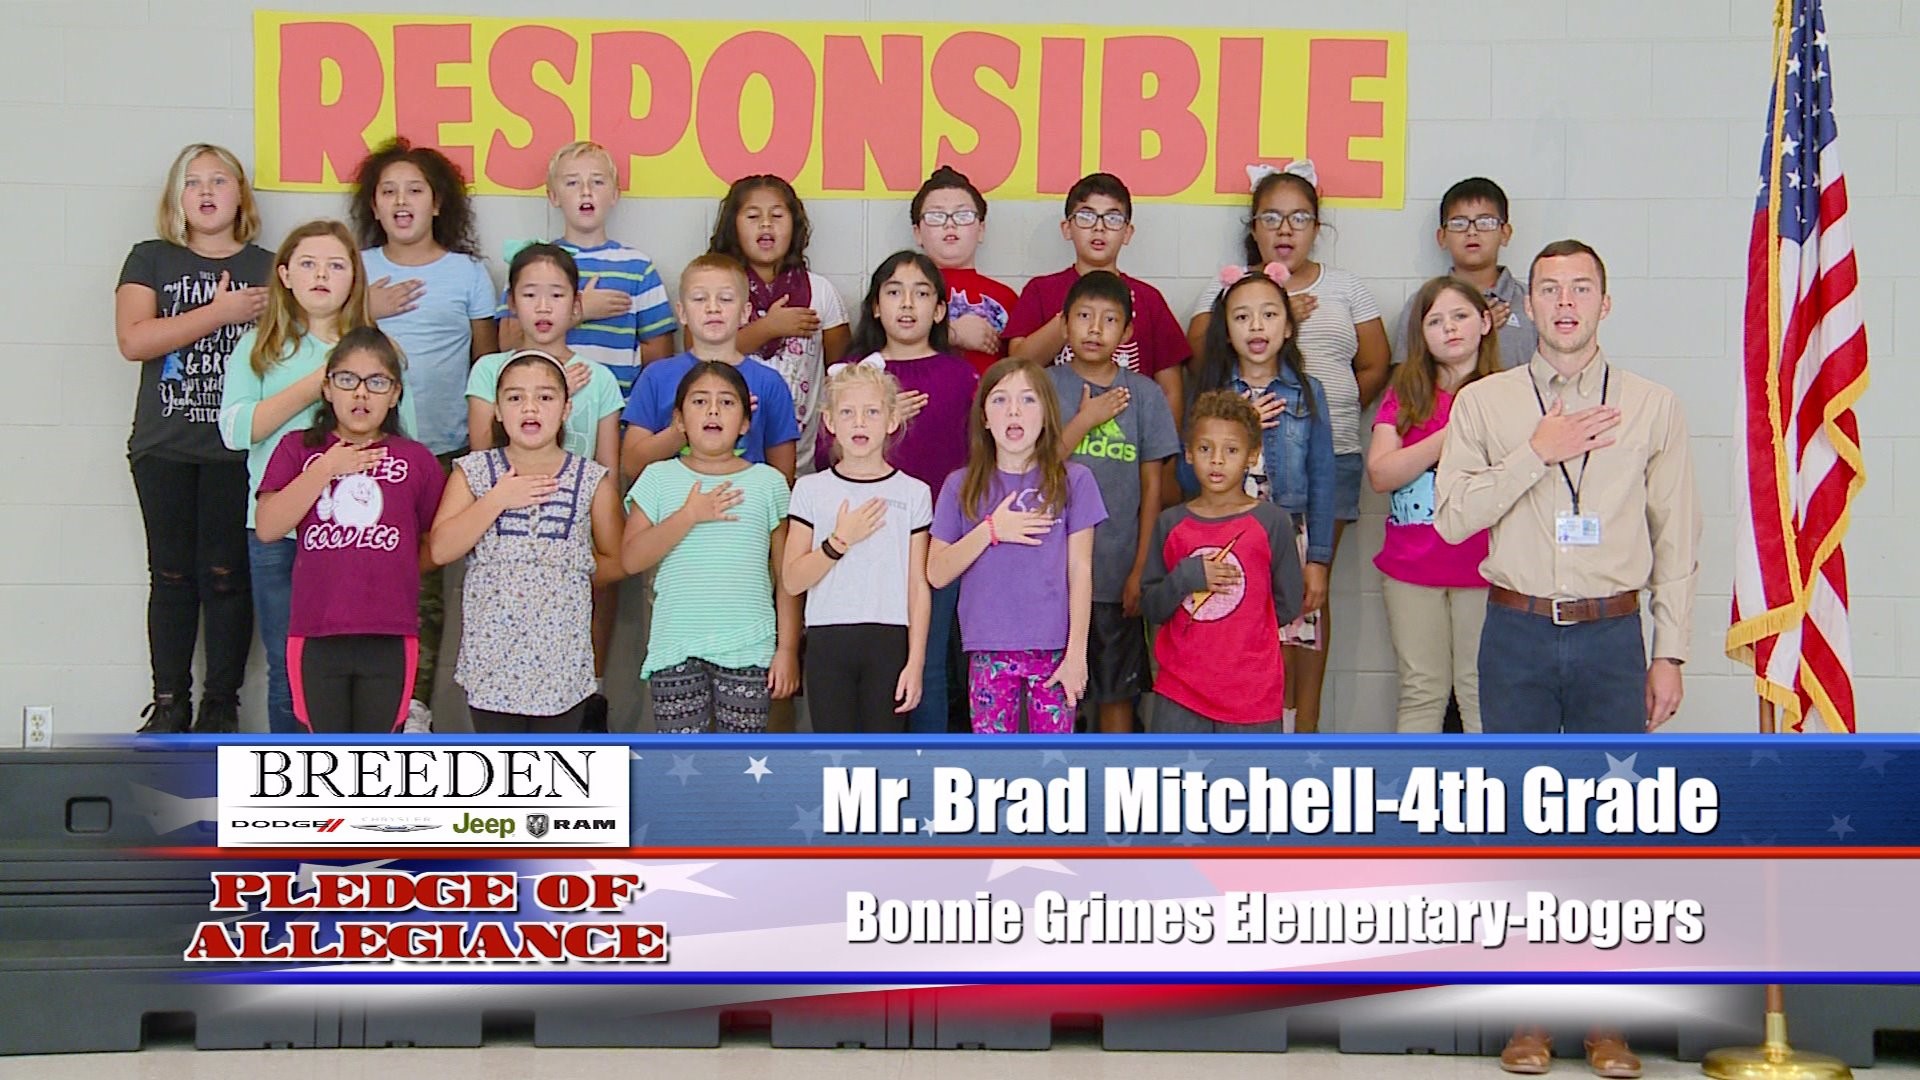 Mr. Brad Mitchell  4th Grade Bonnie Grimes Elementary, Rogers